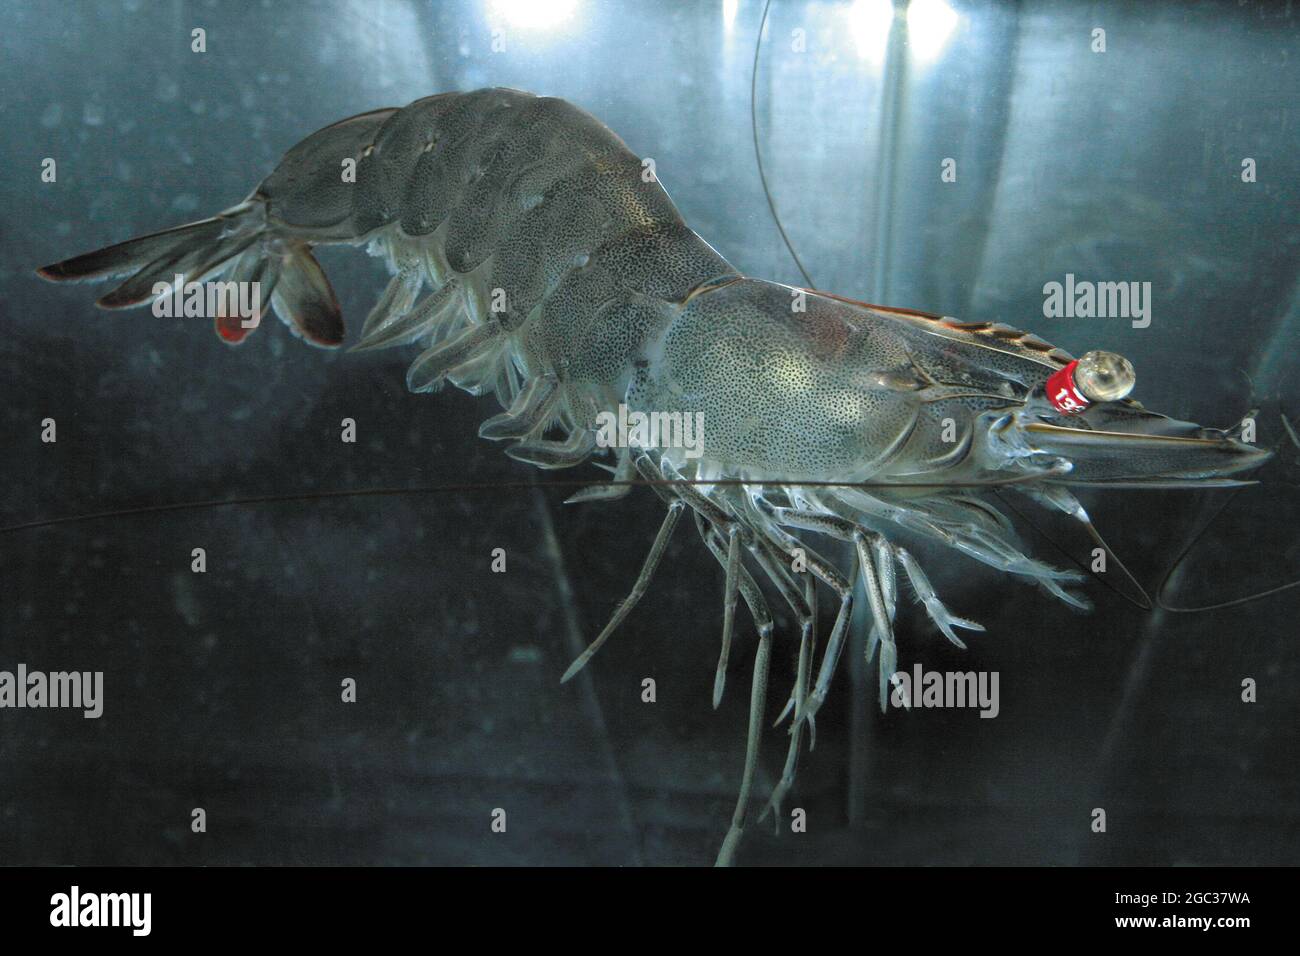 Female Breeder Shrimp disease resistant Stock Photo